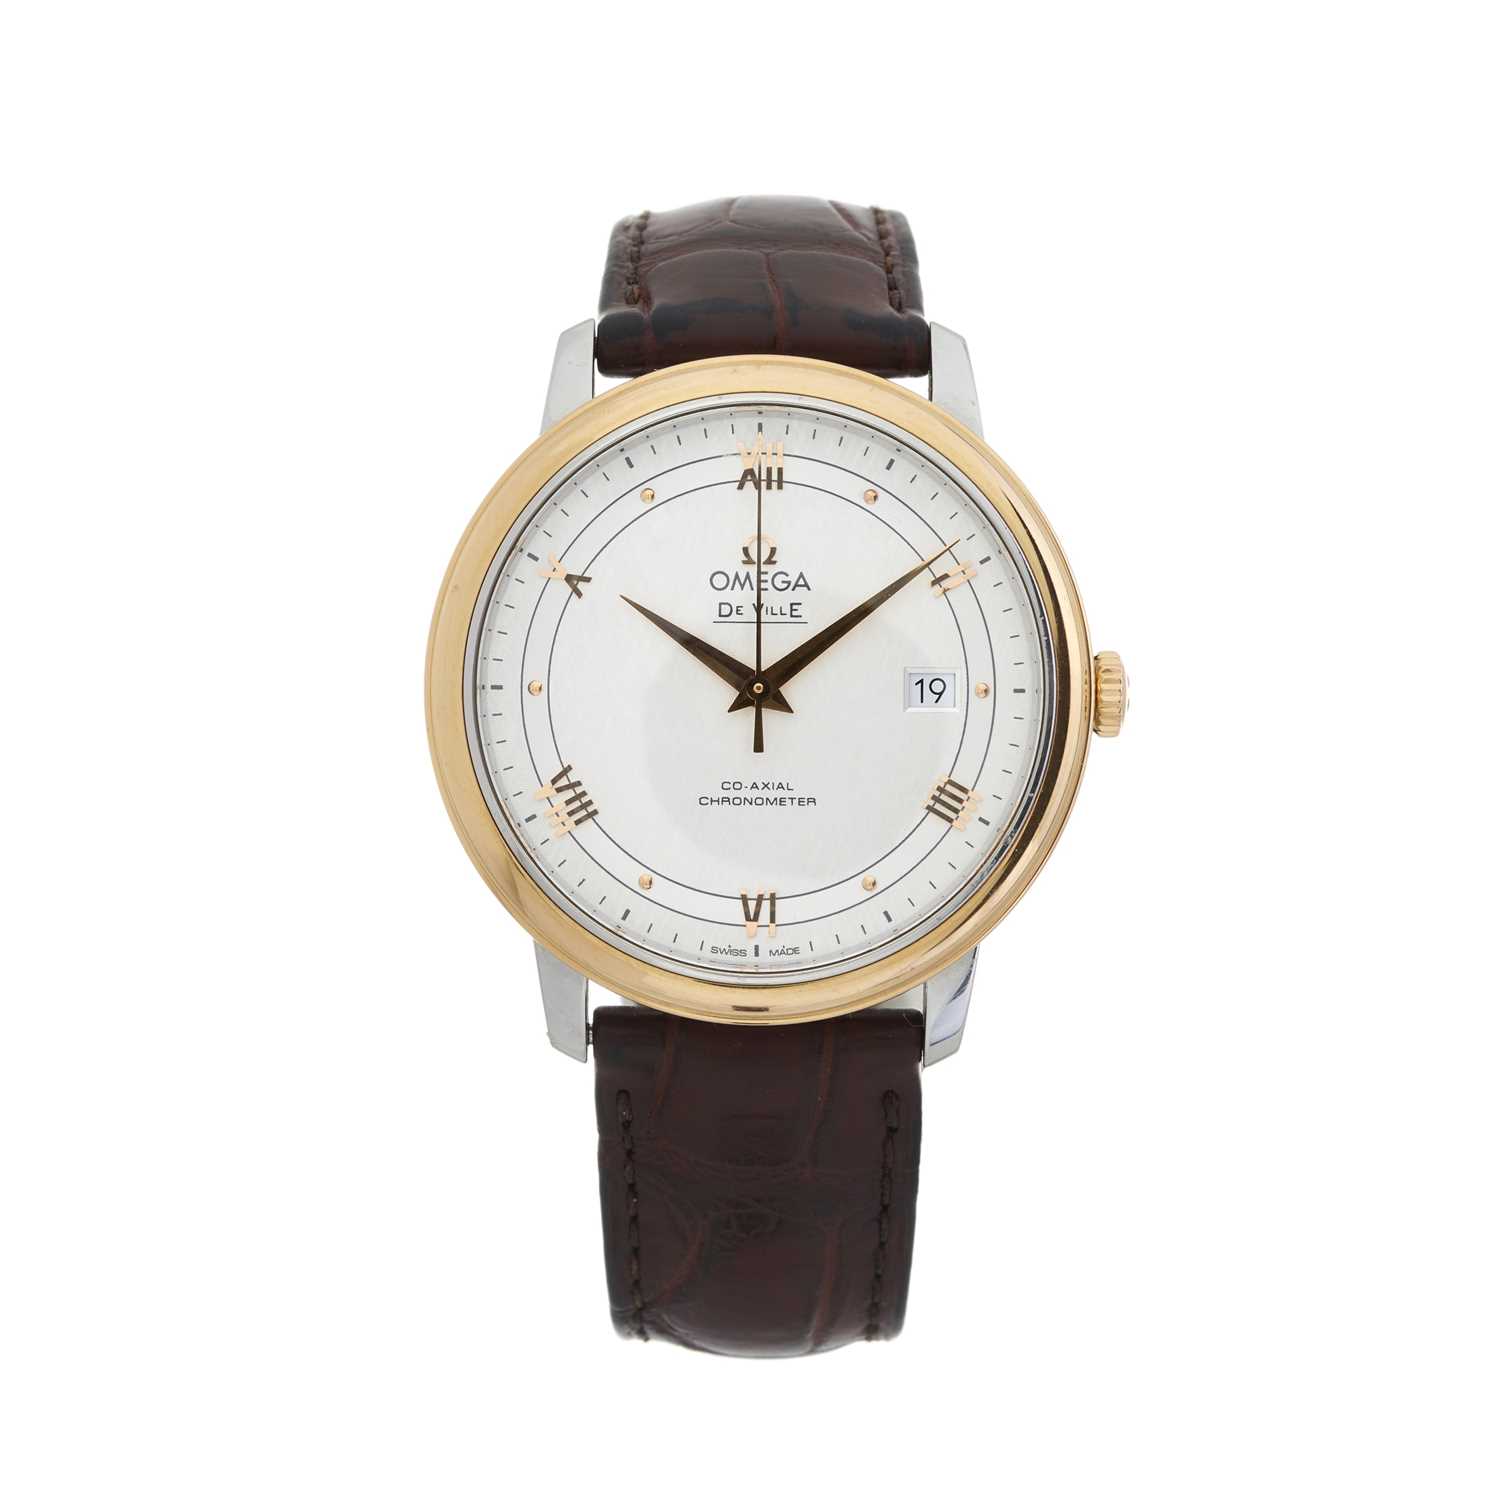 Omega, a De Ville Prestige Co-Axial Chronometer wrist watch